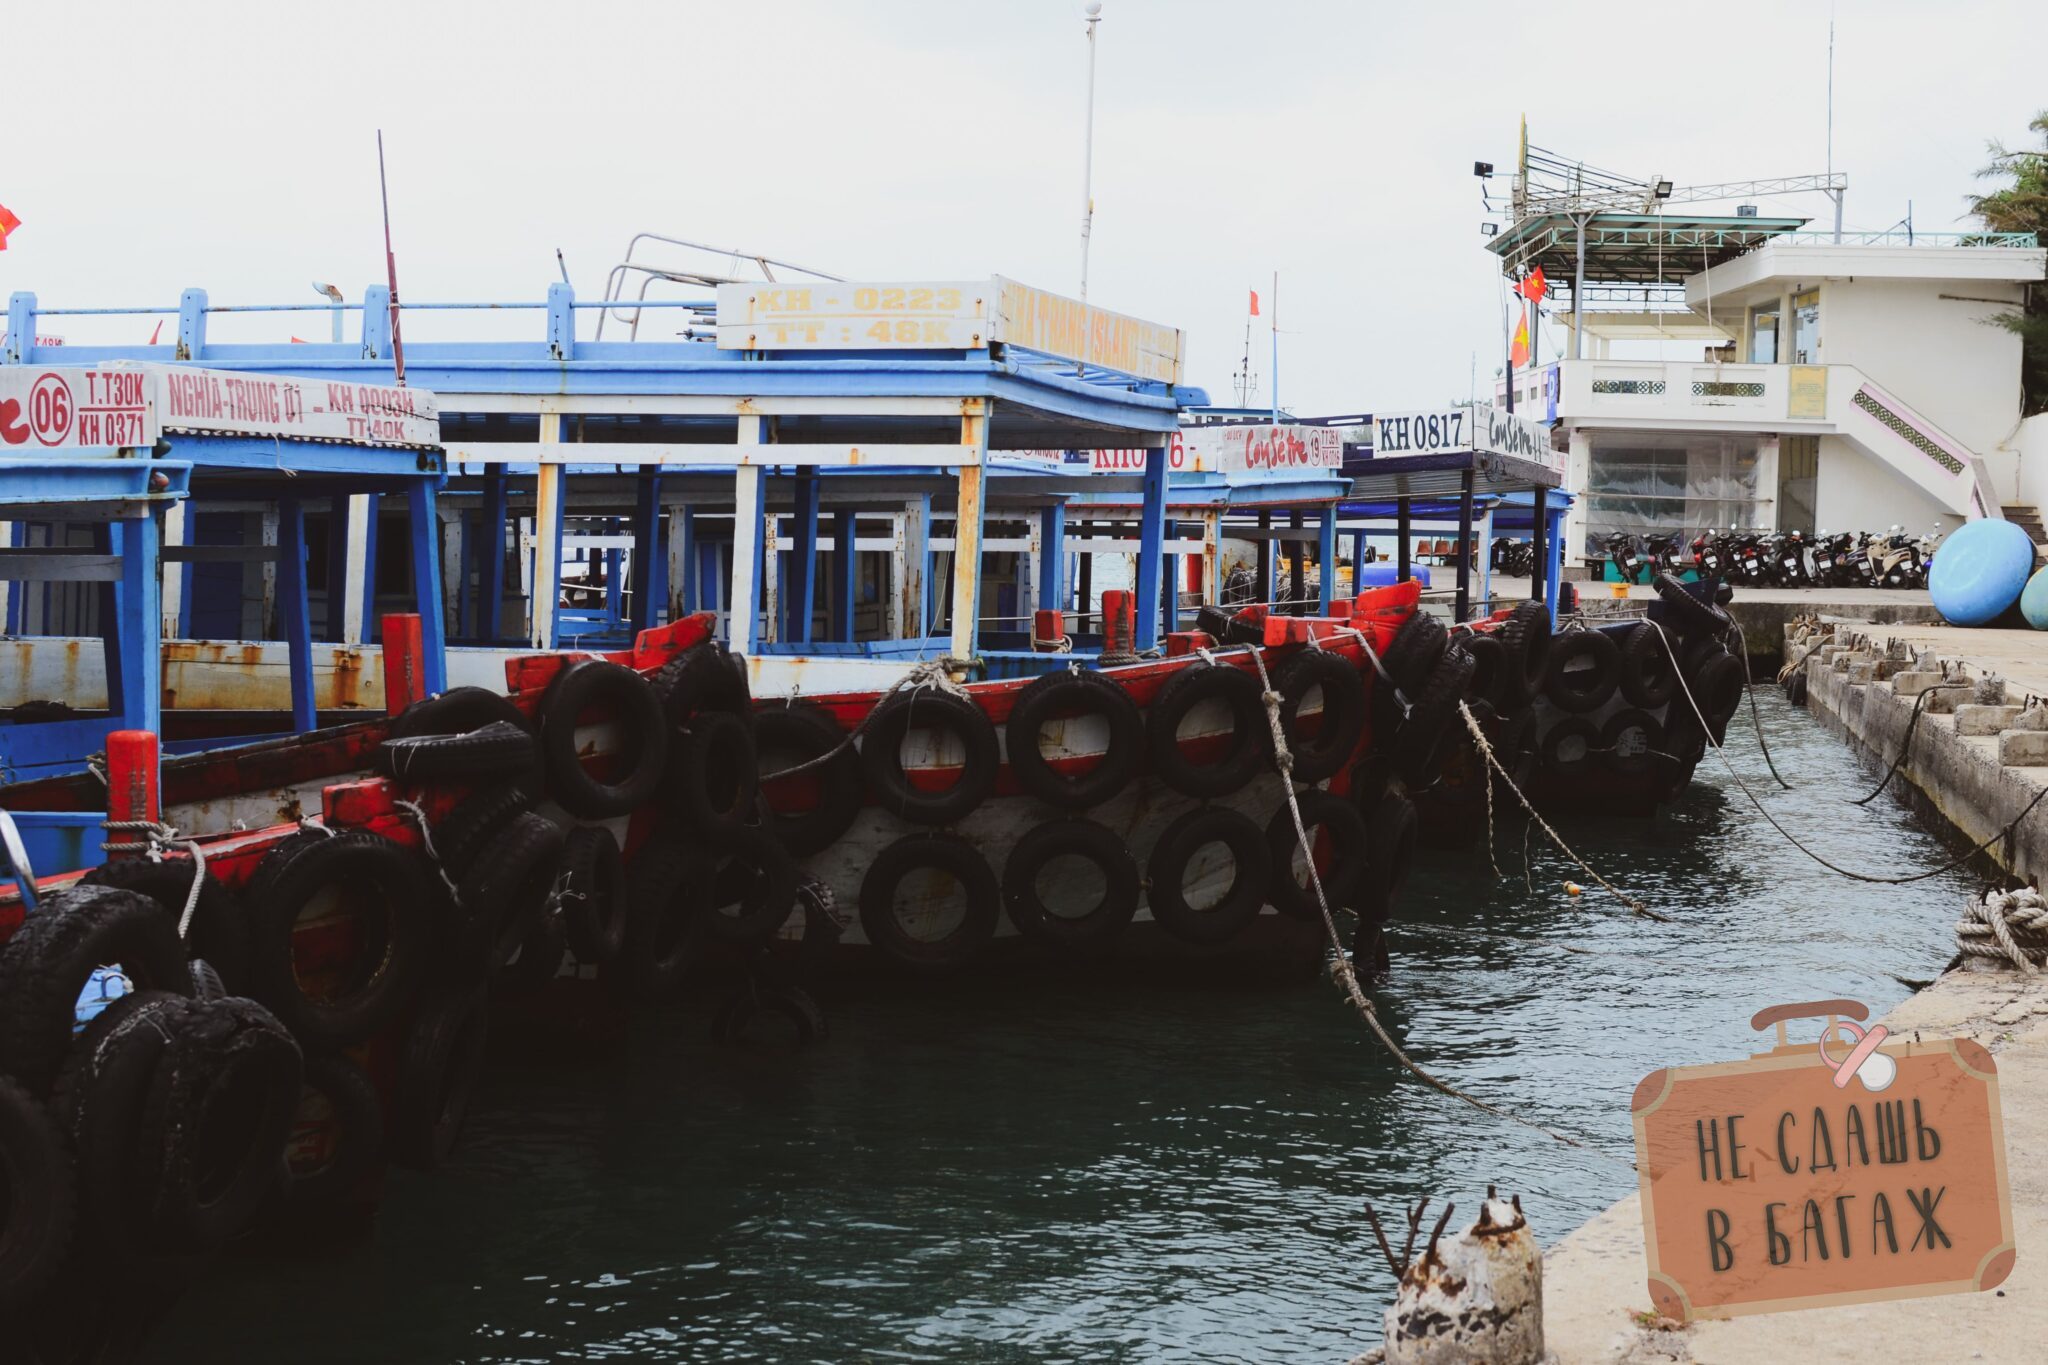 кораблики на остров с океанариумом Нячанг